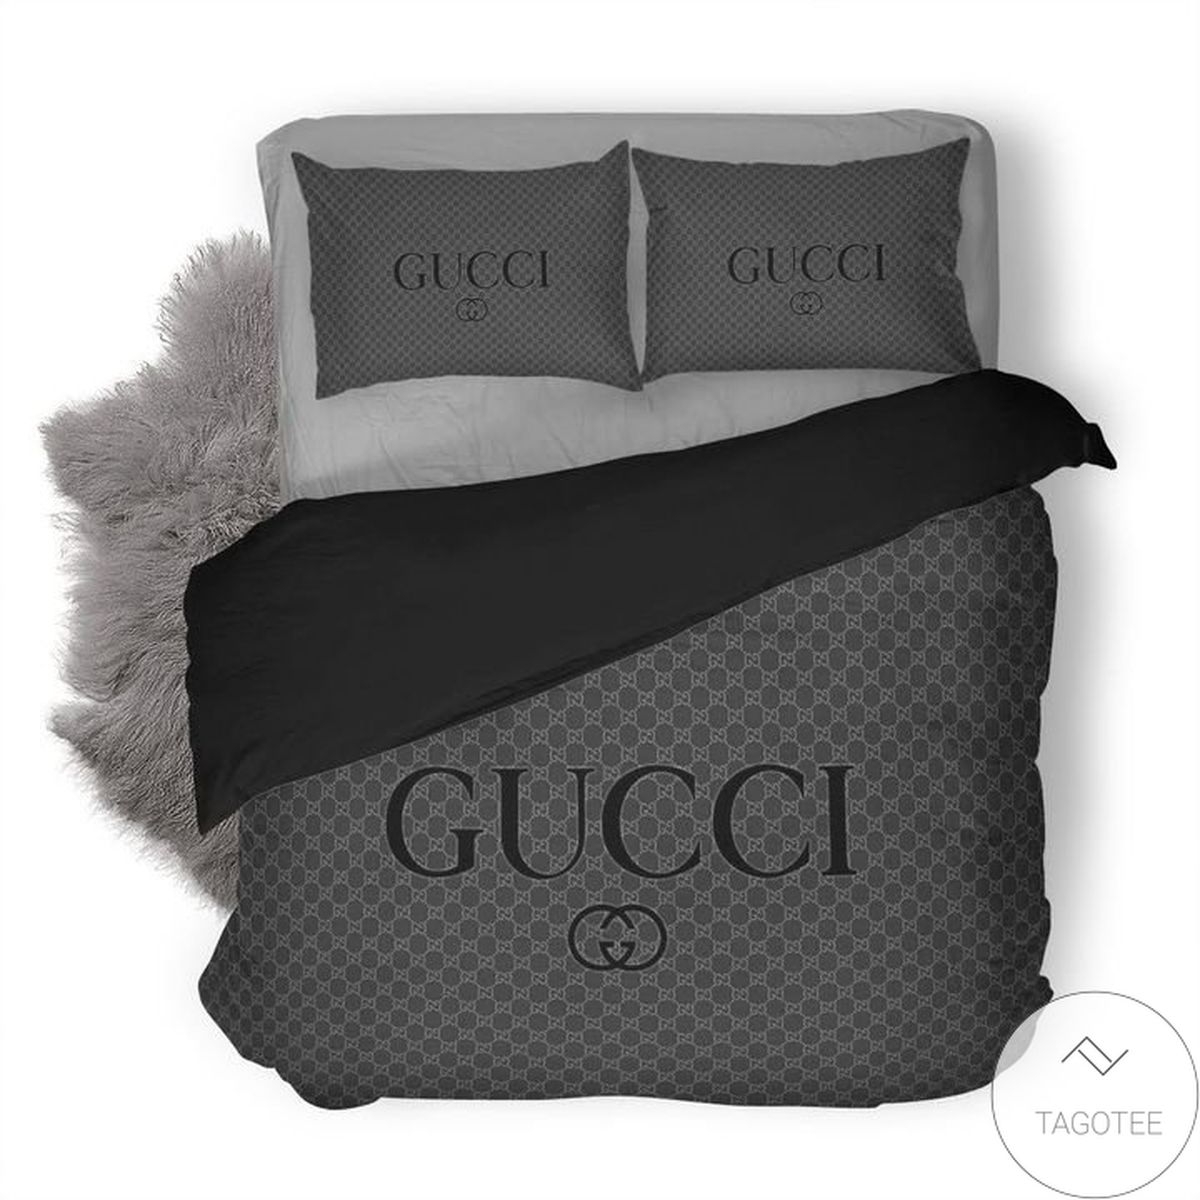 Gucci Logo All Black Bedding Set